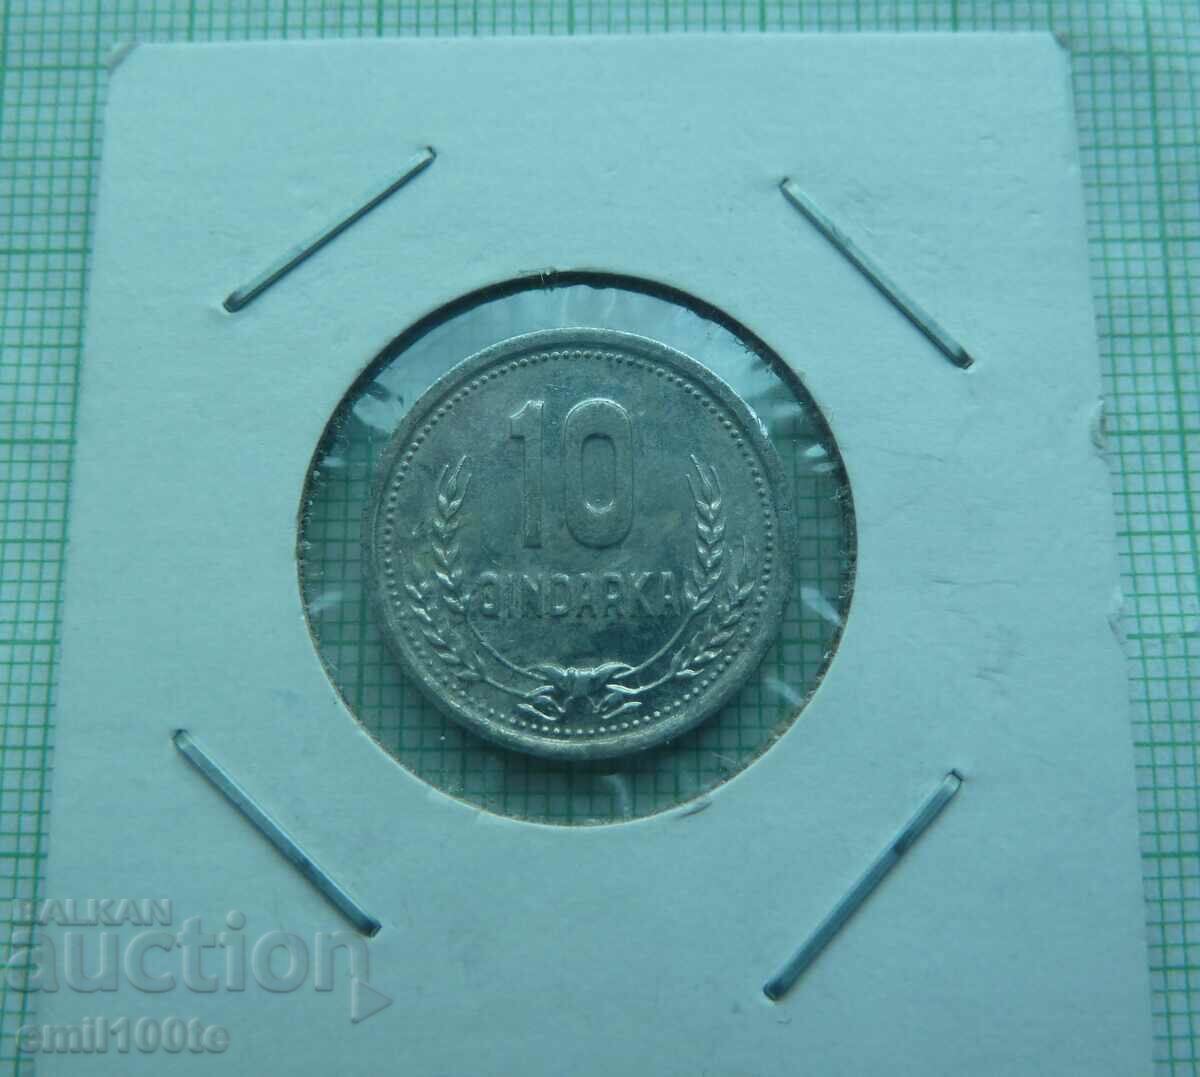 10 kindarki 1988. Albania aluminum